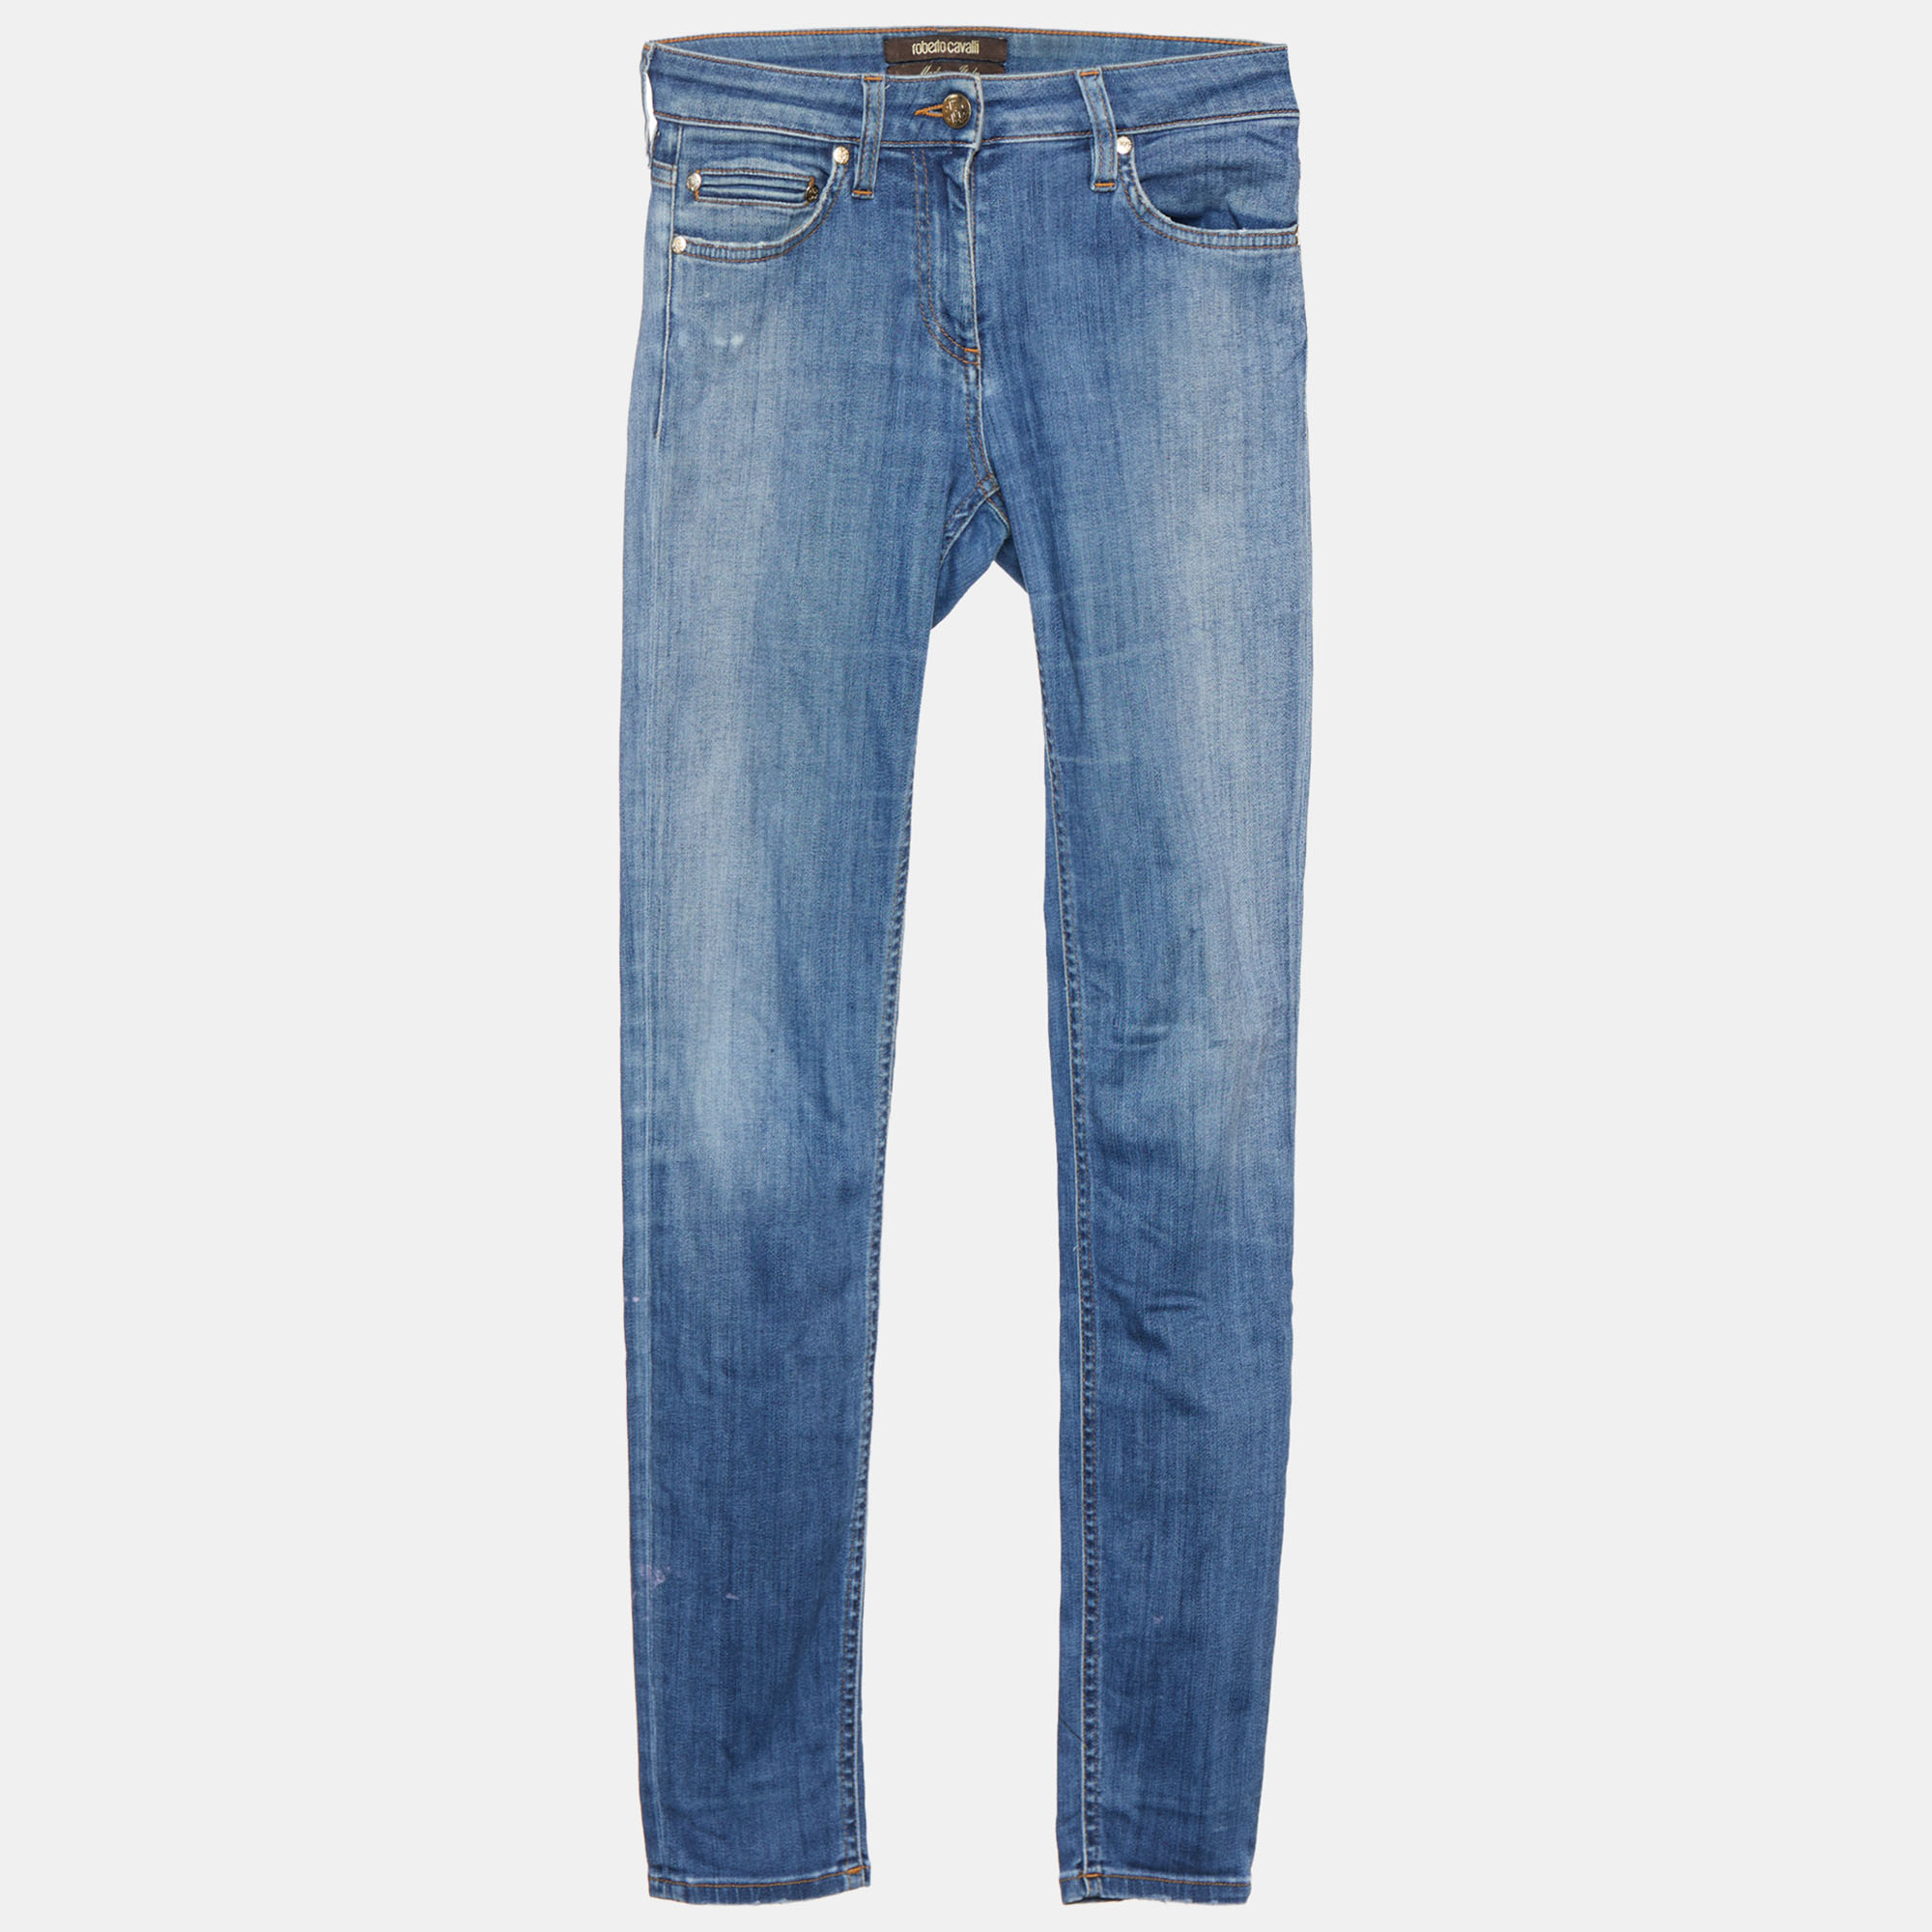 Pre-owned Roberto Cavalli Navy Blue Denim Skinny Jeans S Waist 28"